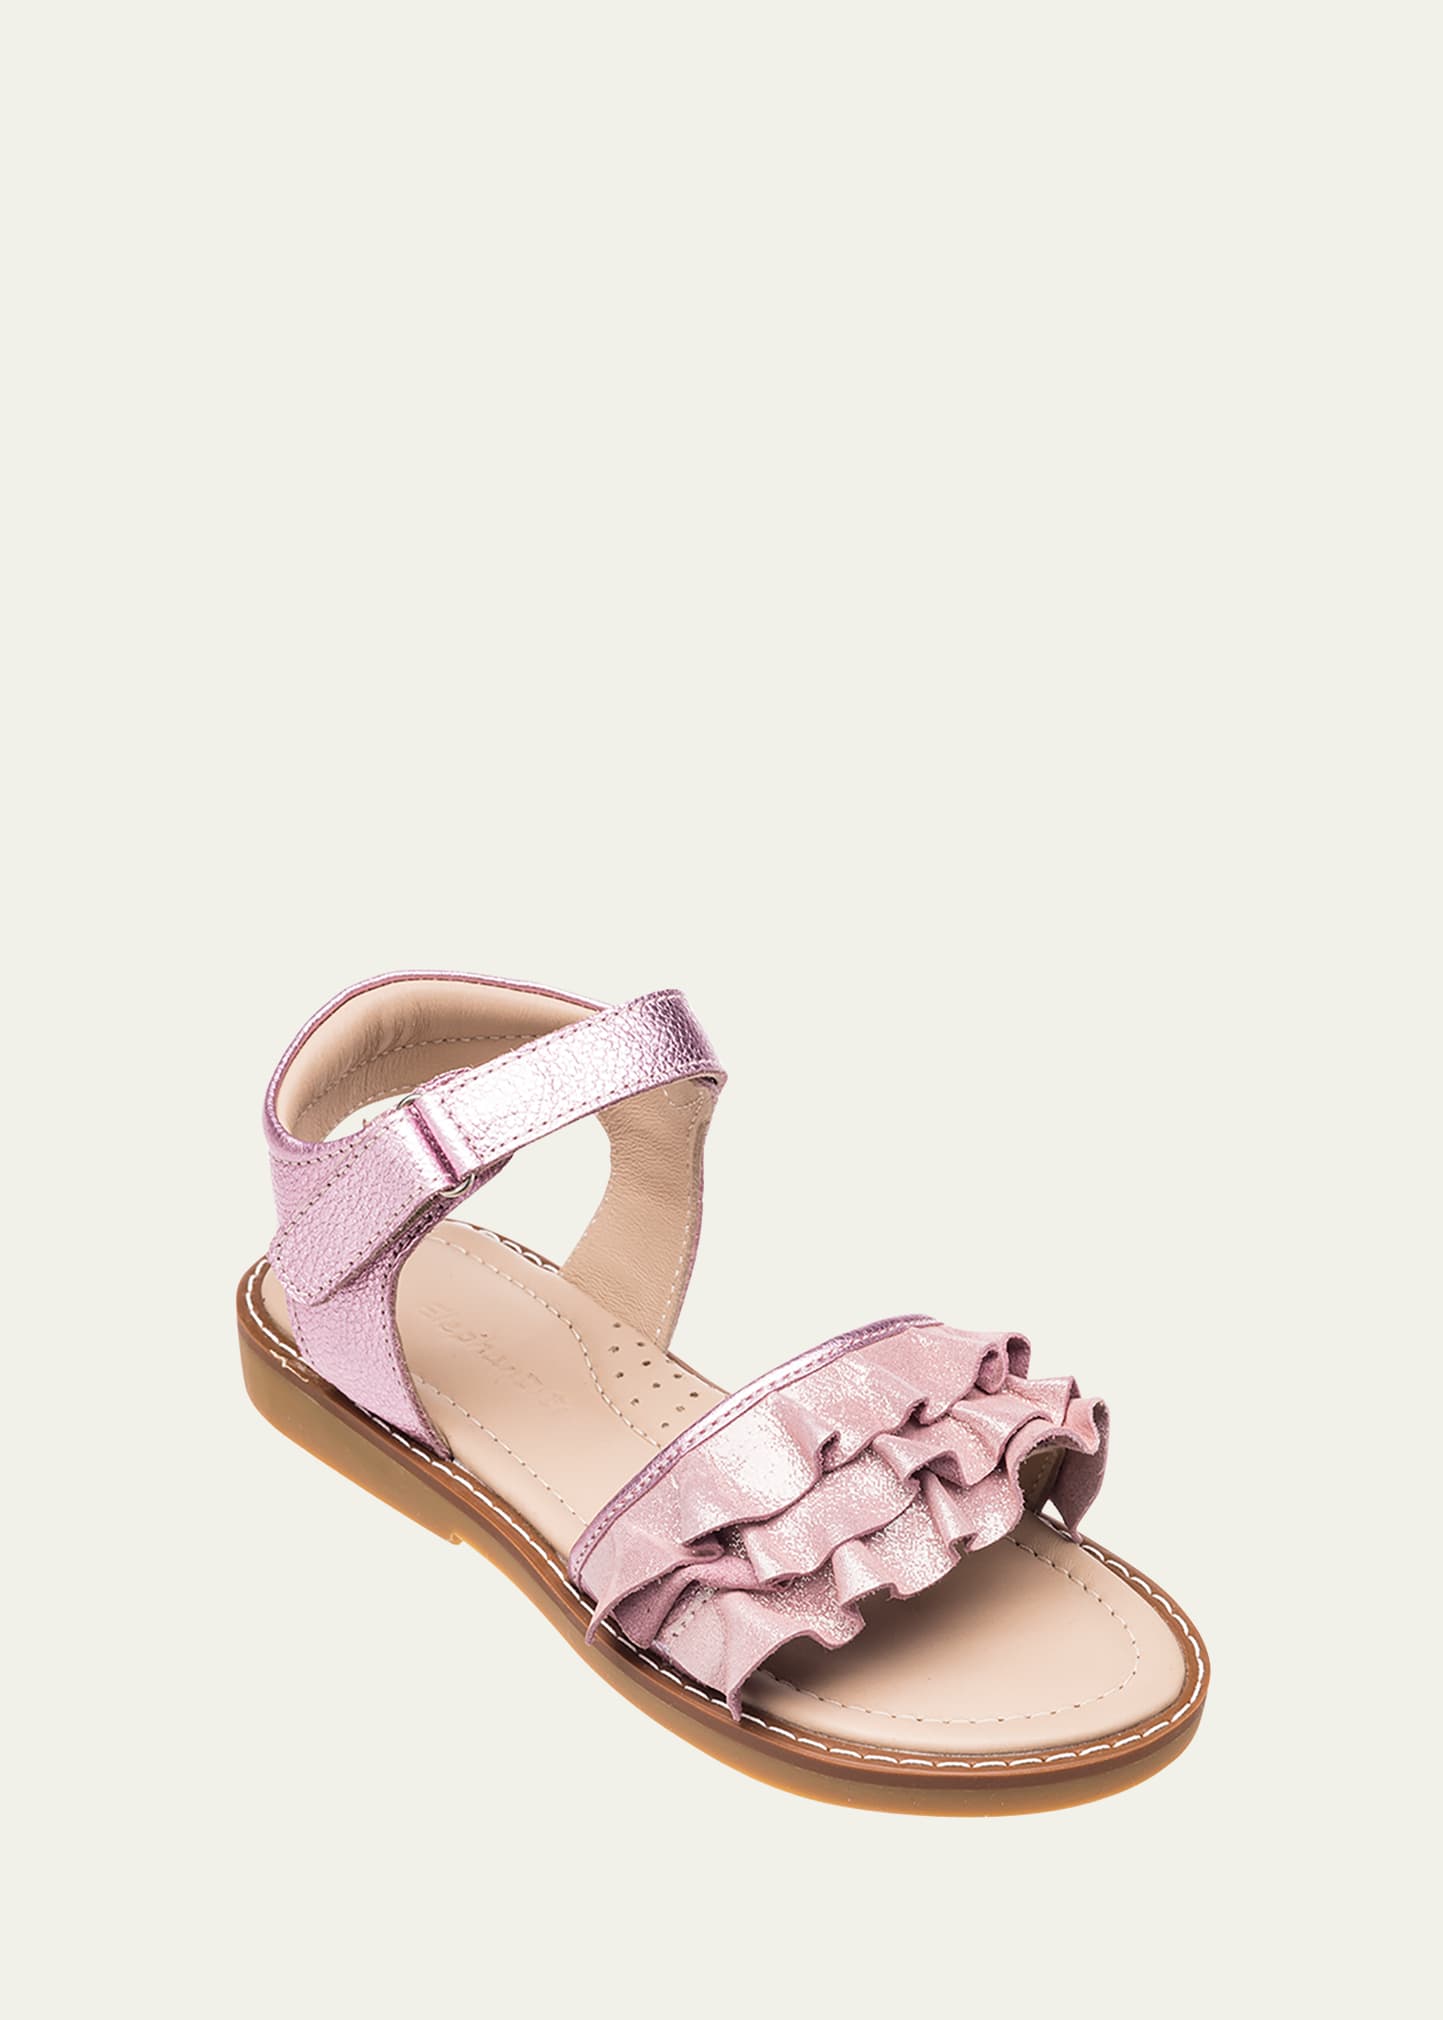 Elephantito Kids' Girl's Flamenco Ruffle Metallic Flat Sandals, Baby